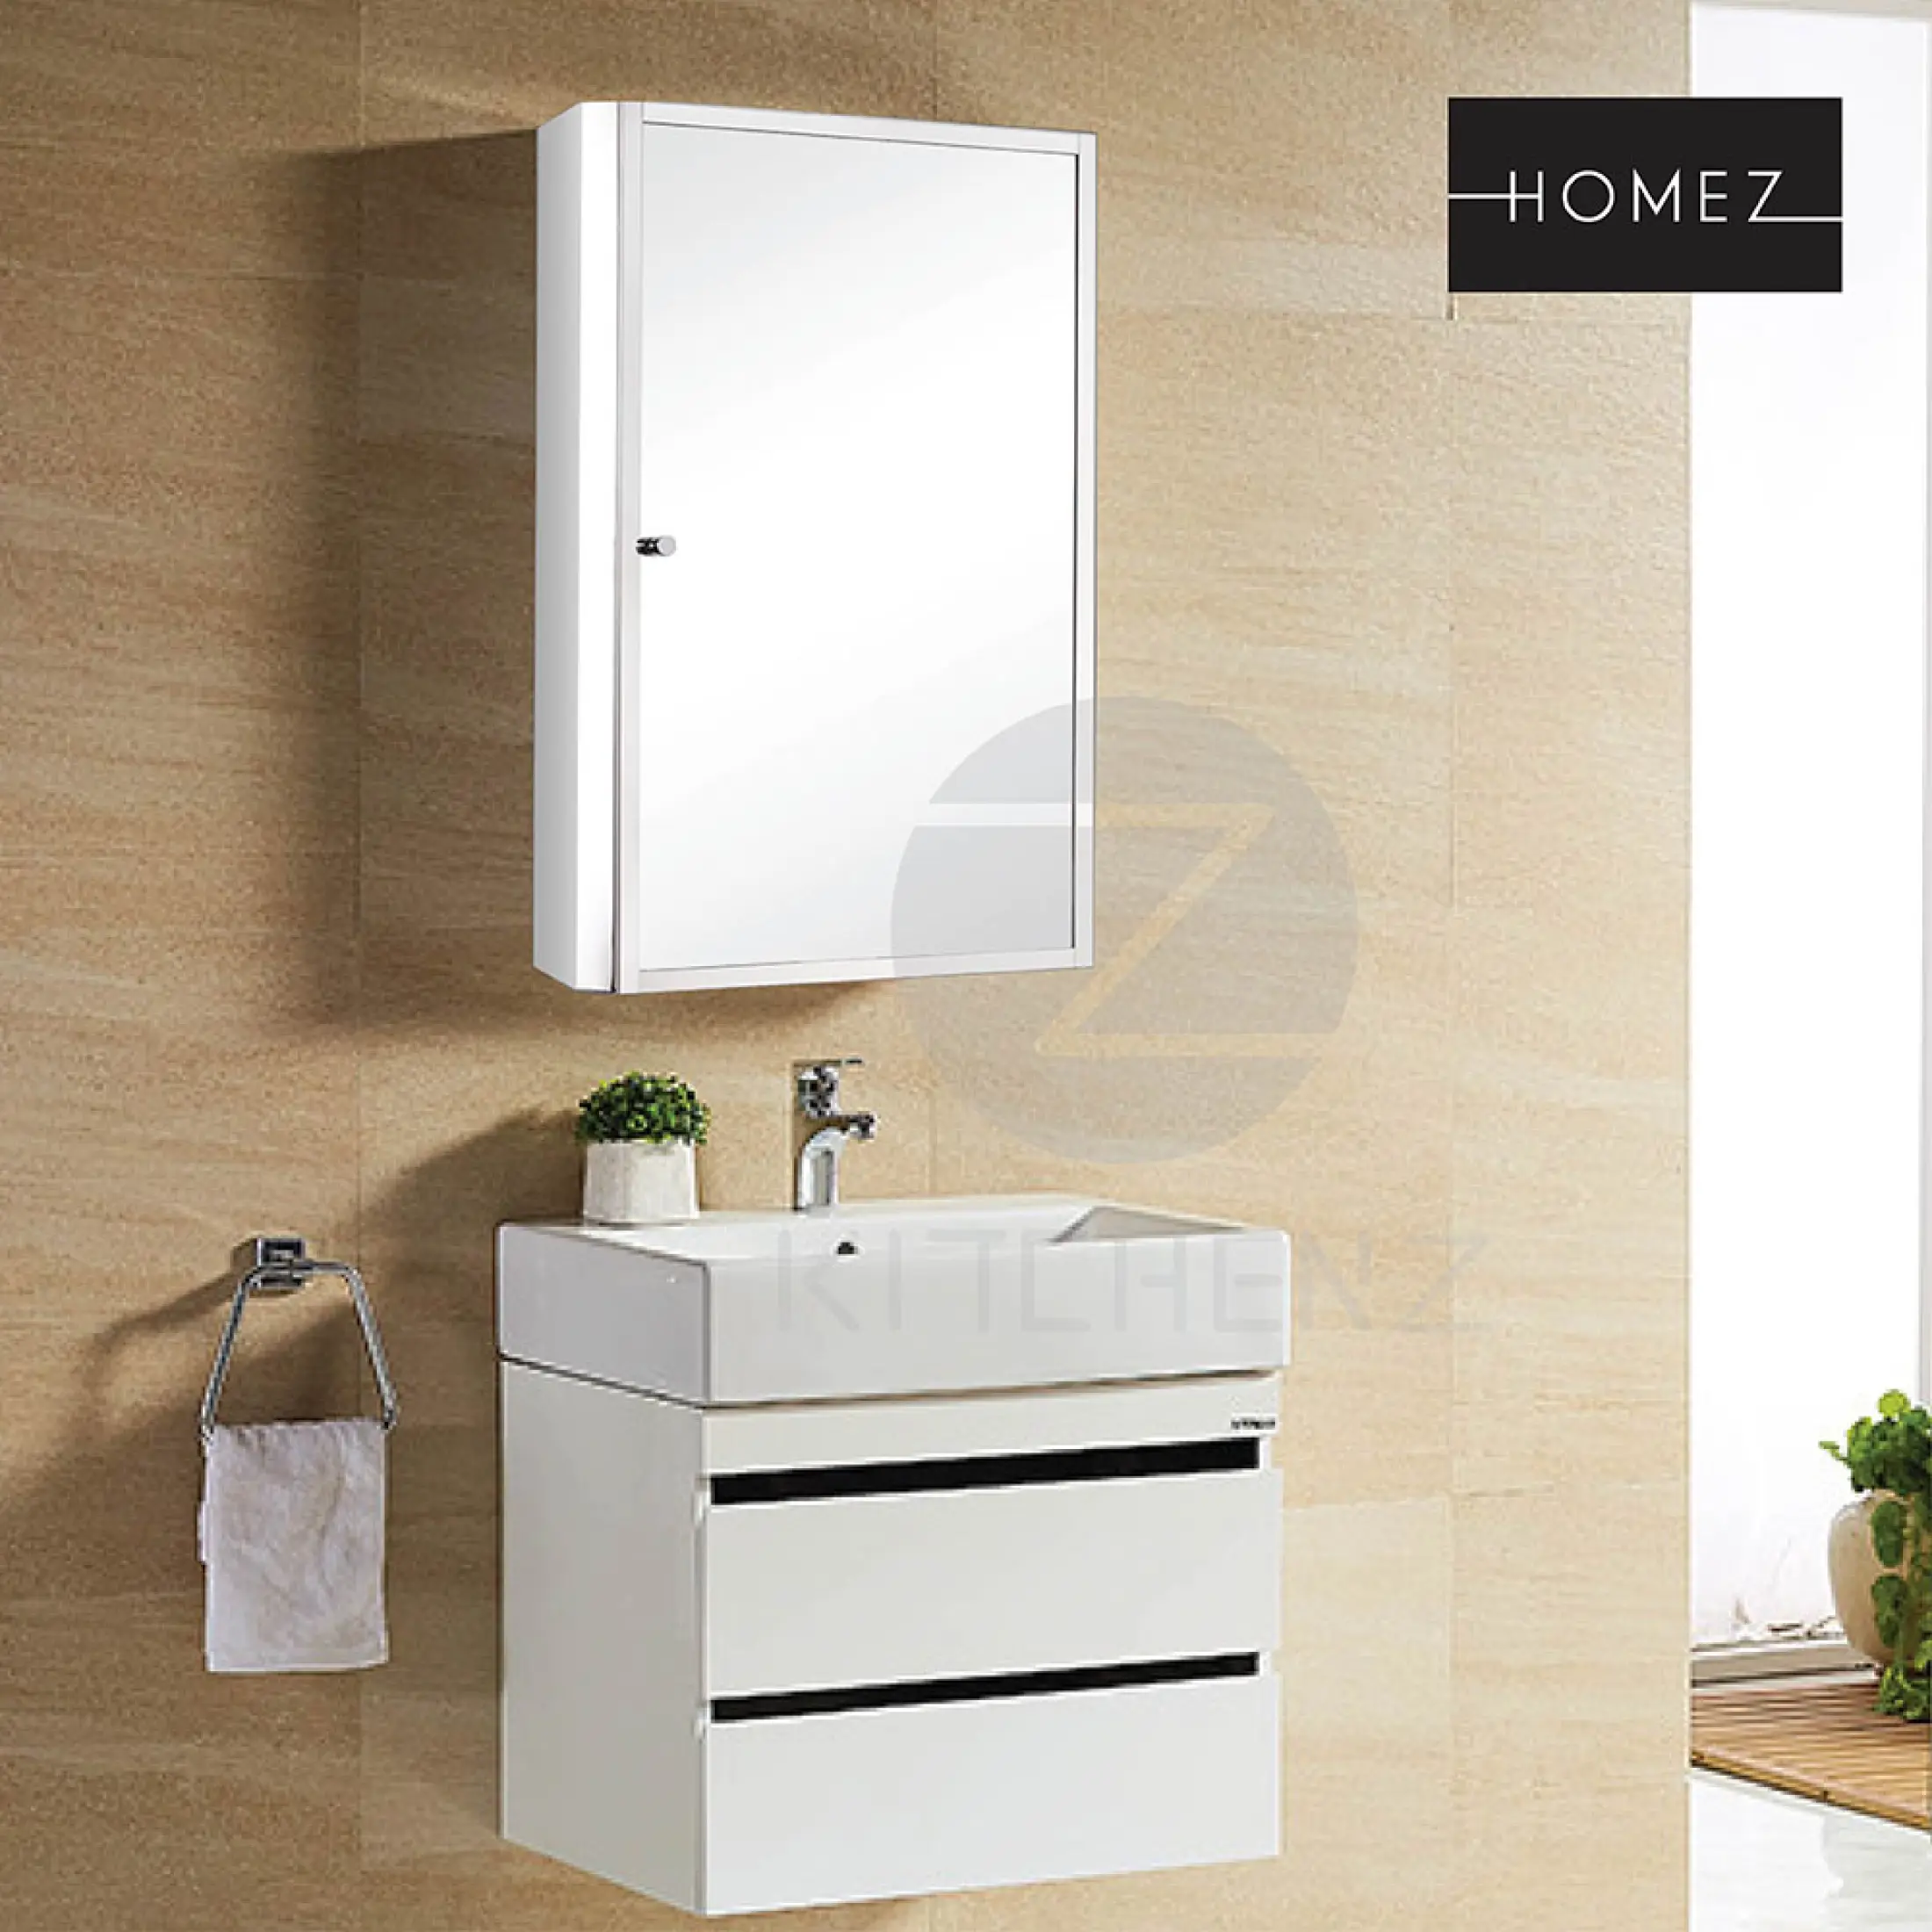 Homez Bathroom Mirror Cabinet D7042r 100 Stainless Steel L500 X W130 X H700mm Lazada Singapore